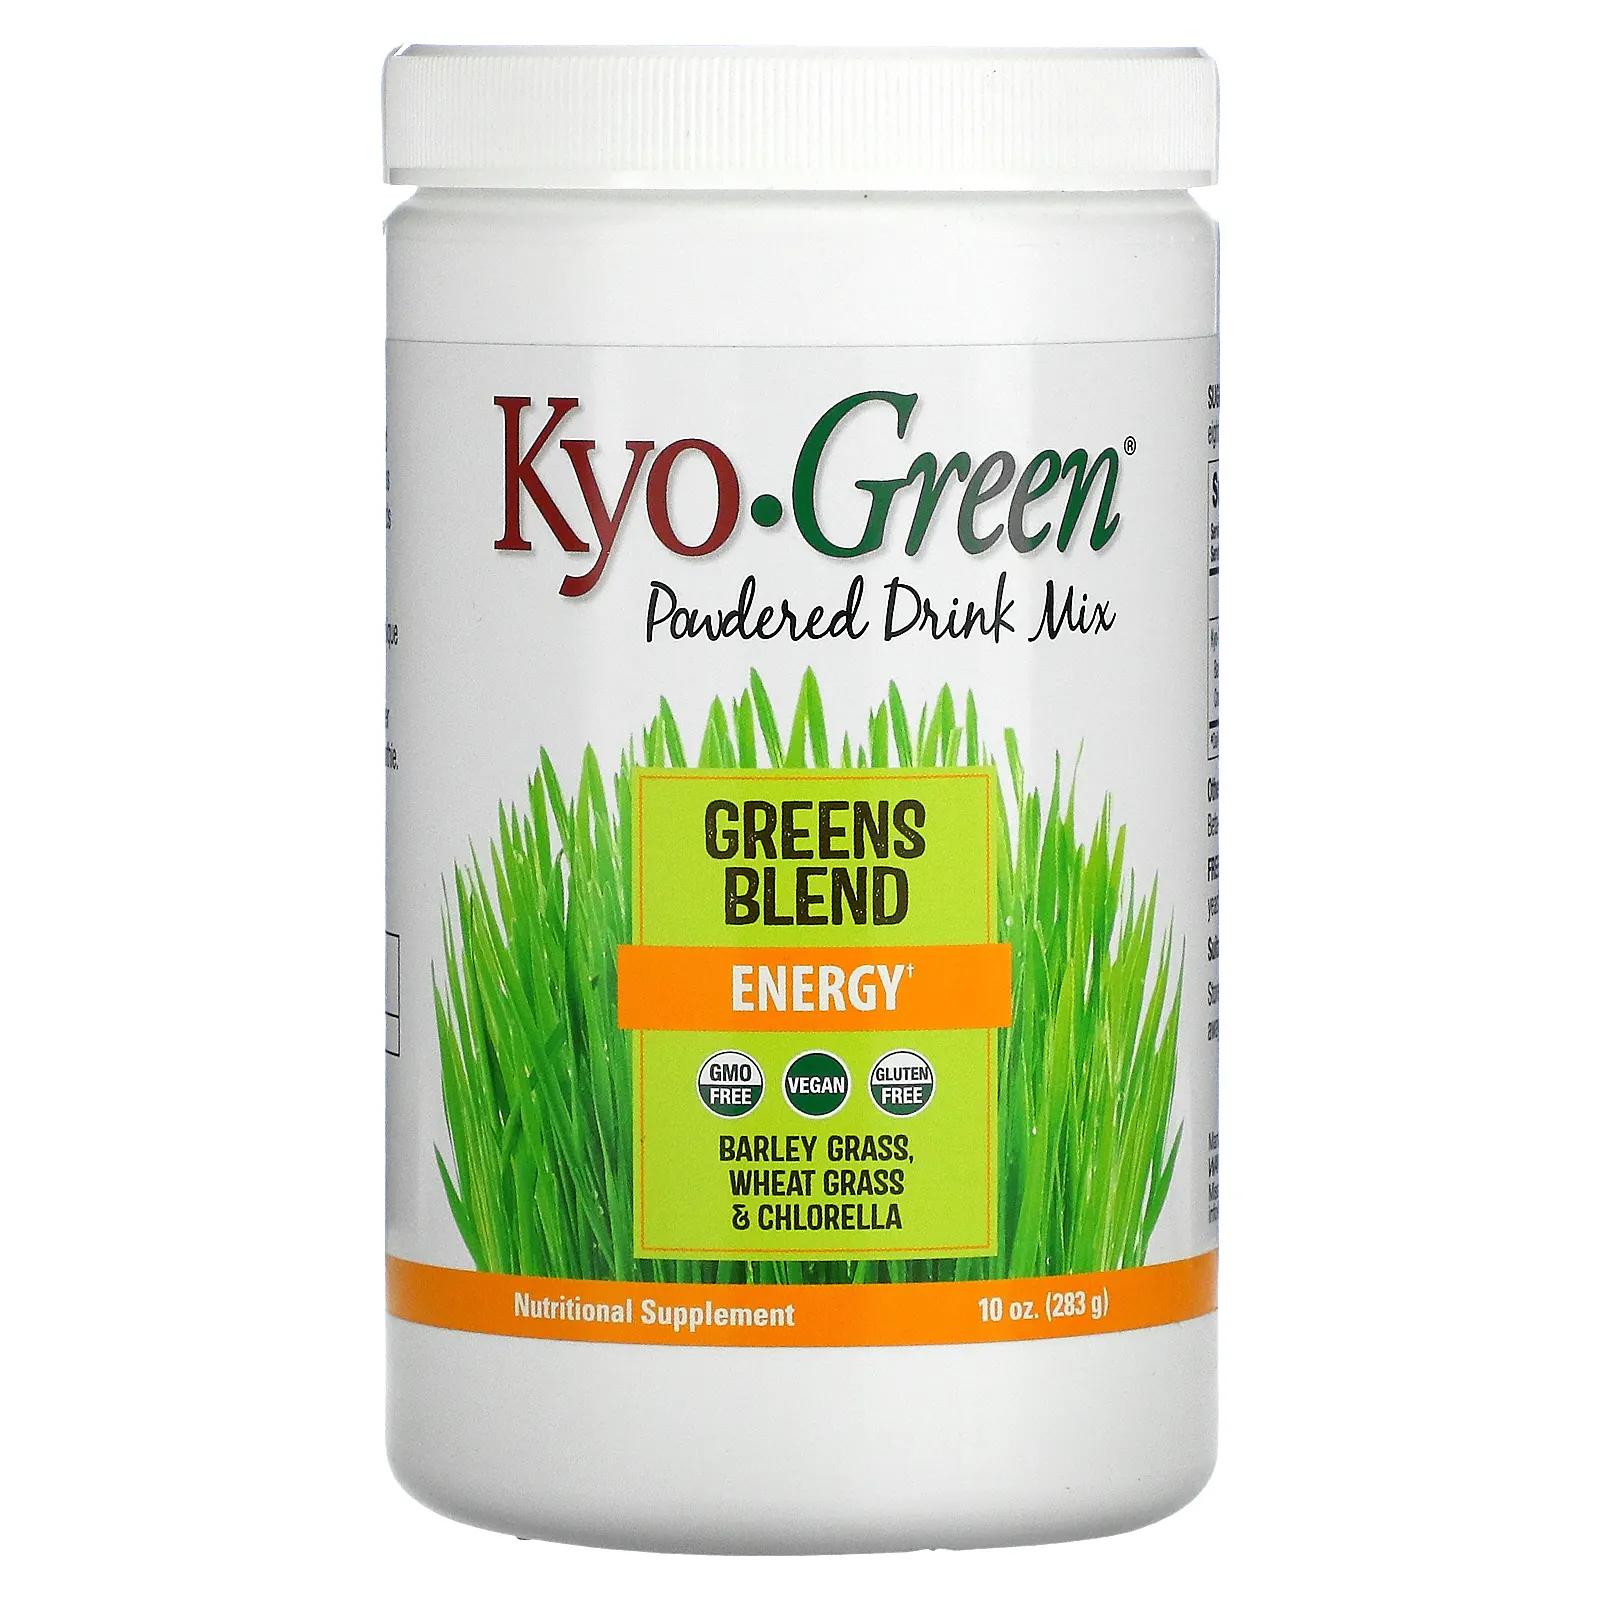 Kyolic Kyo-Green сухая смесь для напитка 10 унций (283 г) kyolic kyo green сухая смесь для напитка 10 унций 283 г